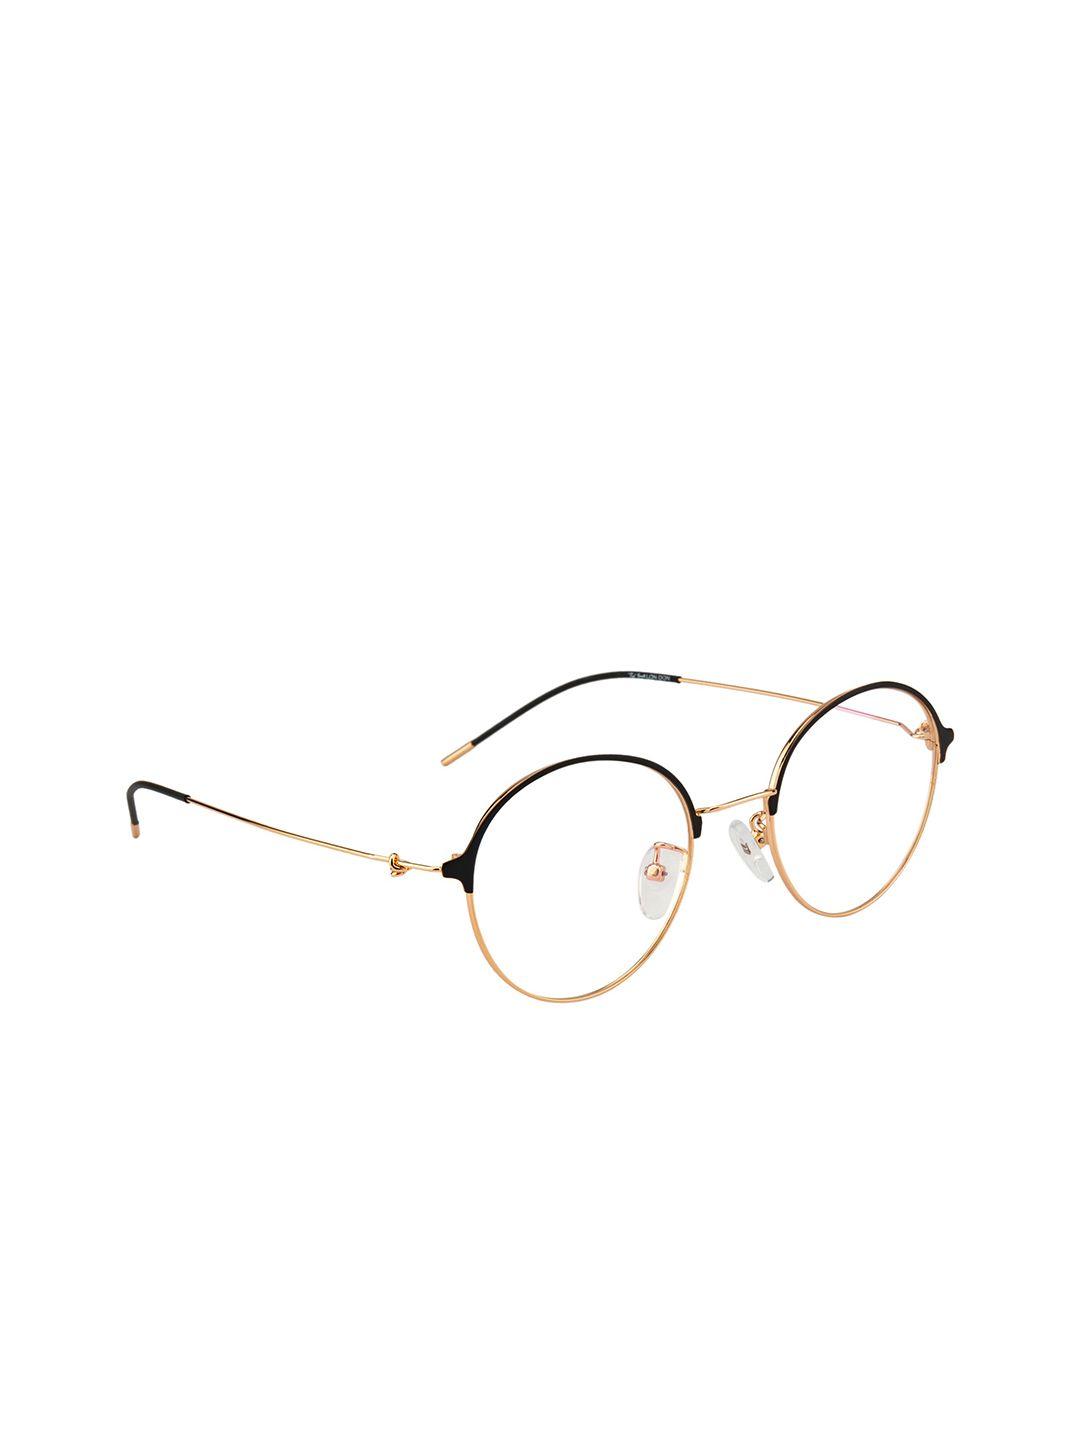 ted smith unisex gold-toned & black full rim round frames eyeglasses